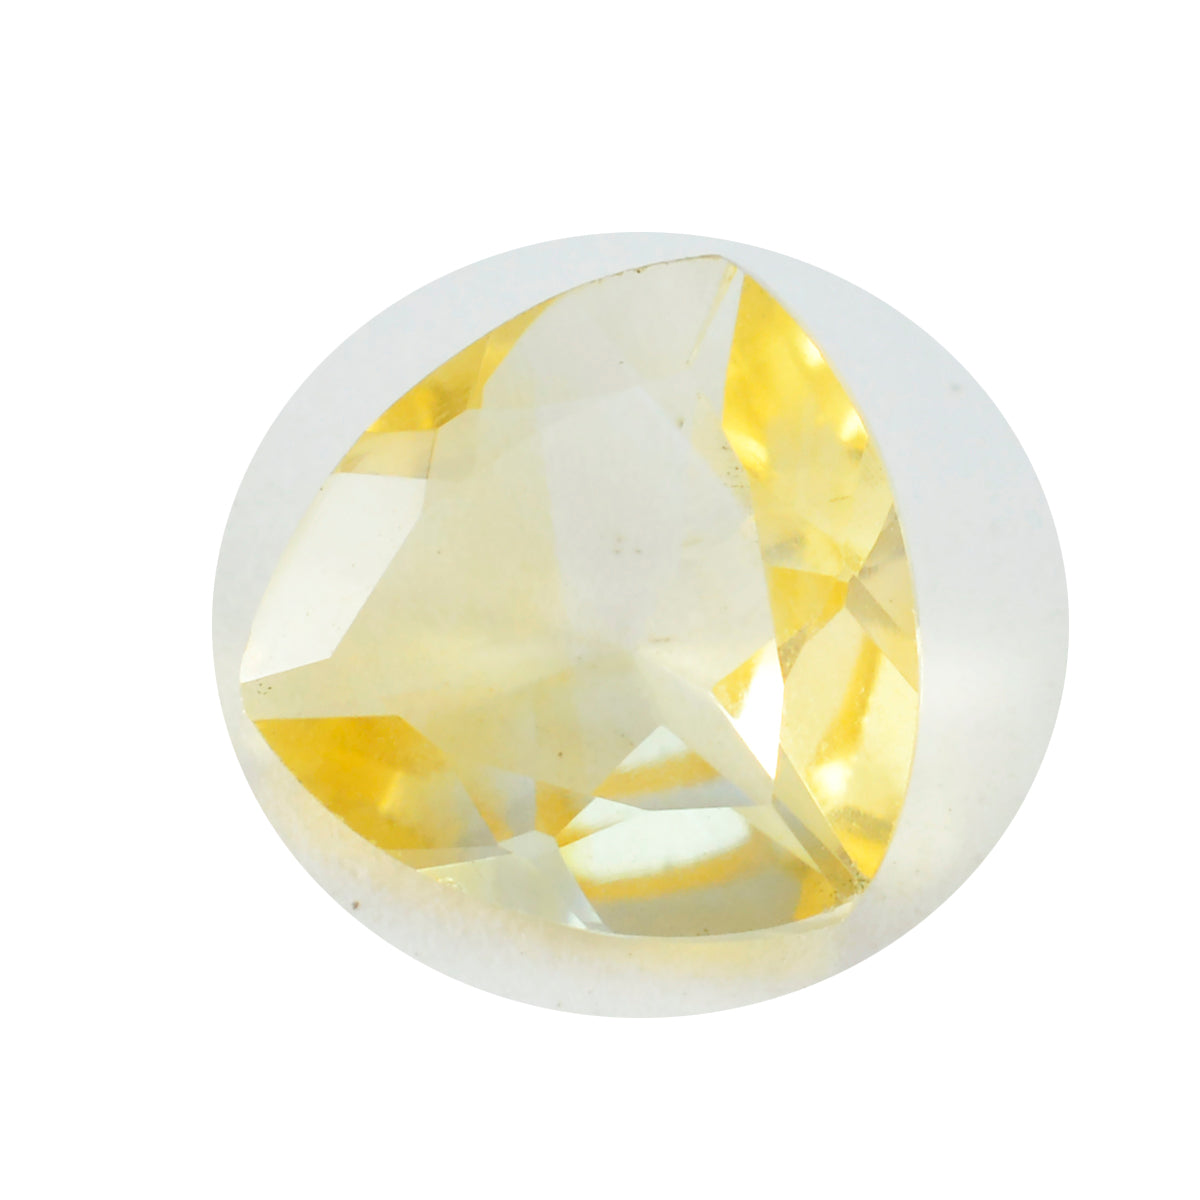 Riyogems 1PC Natural Yellow Citrine Faceted 13x13 mm Trillion Shape superb Quality Stone